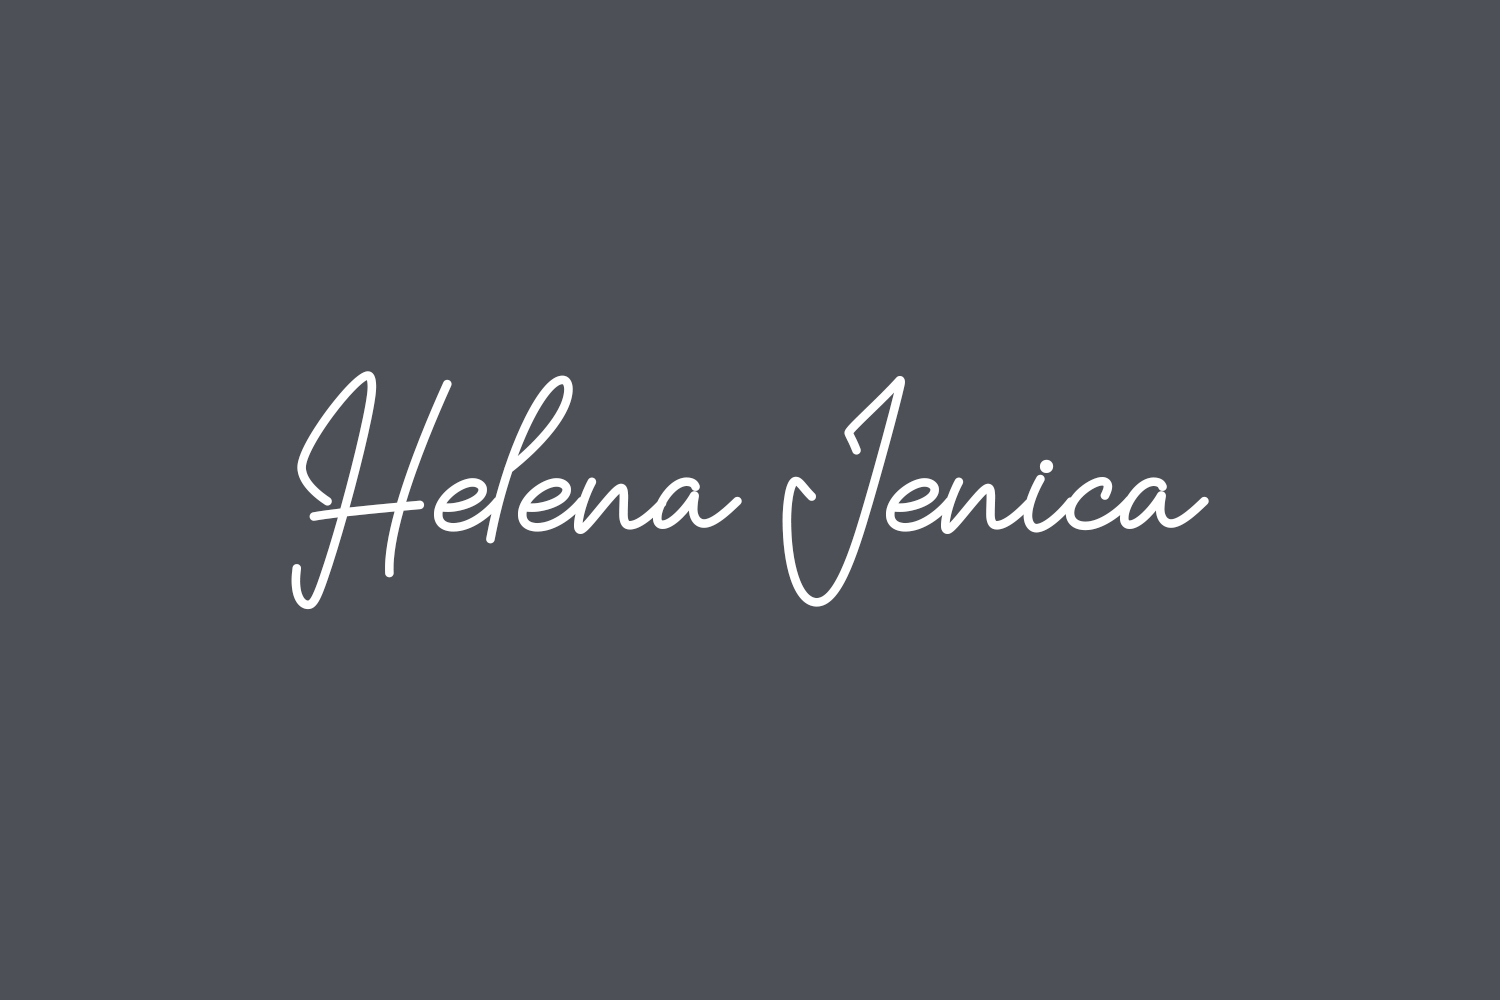 Helena Jenica Free Font